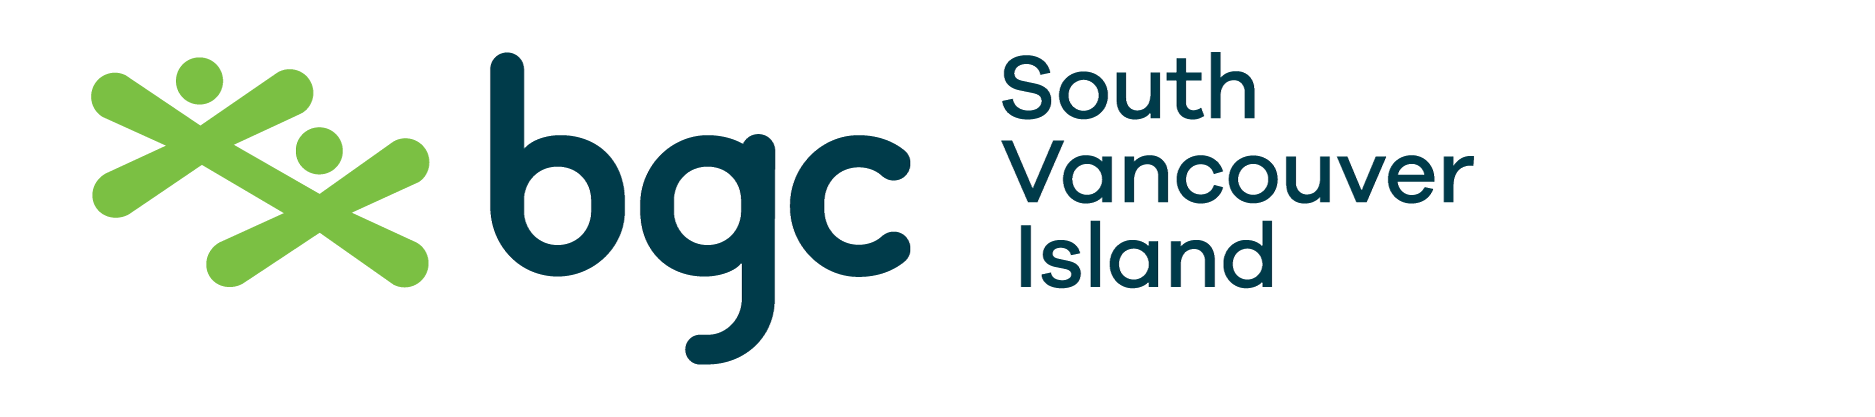 BGC South Vancouver Island